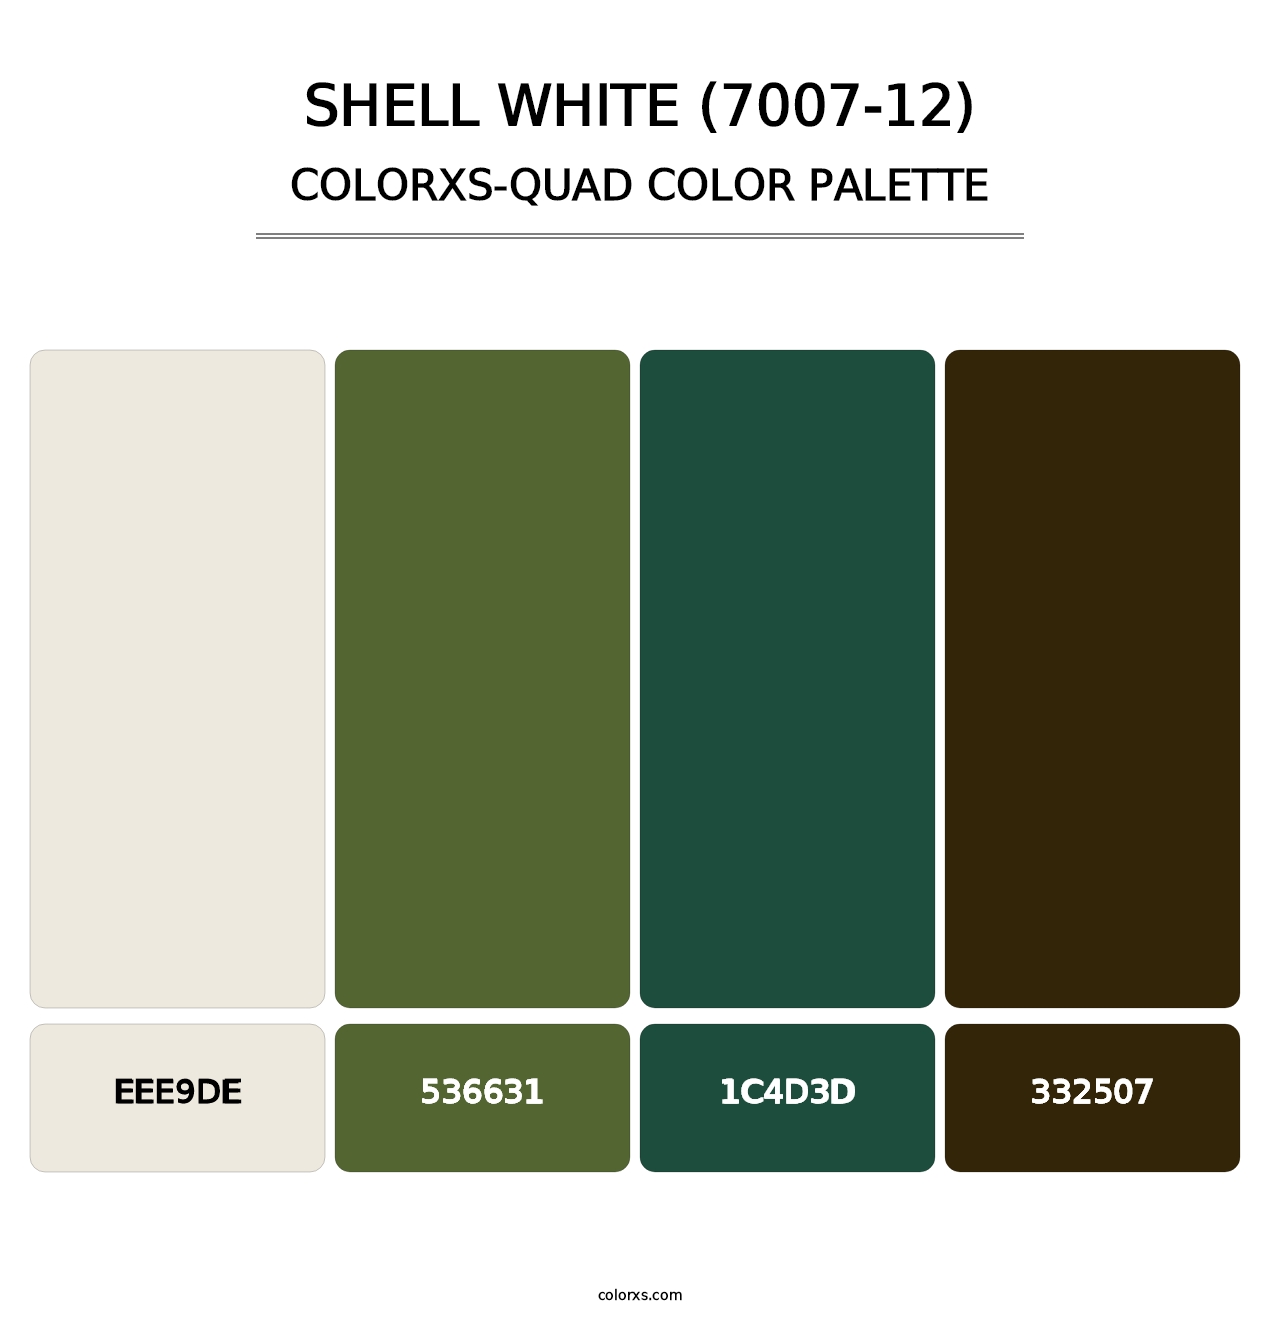 Shell White (7007-12) - Colorxs Quad Palette